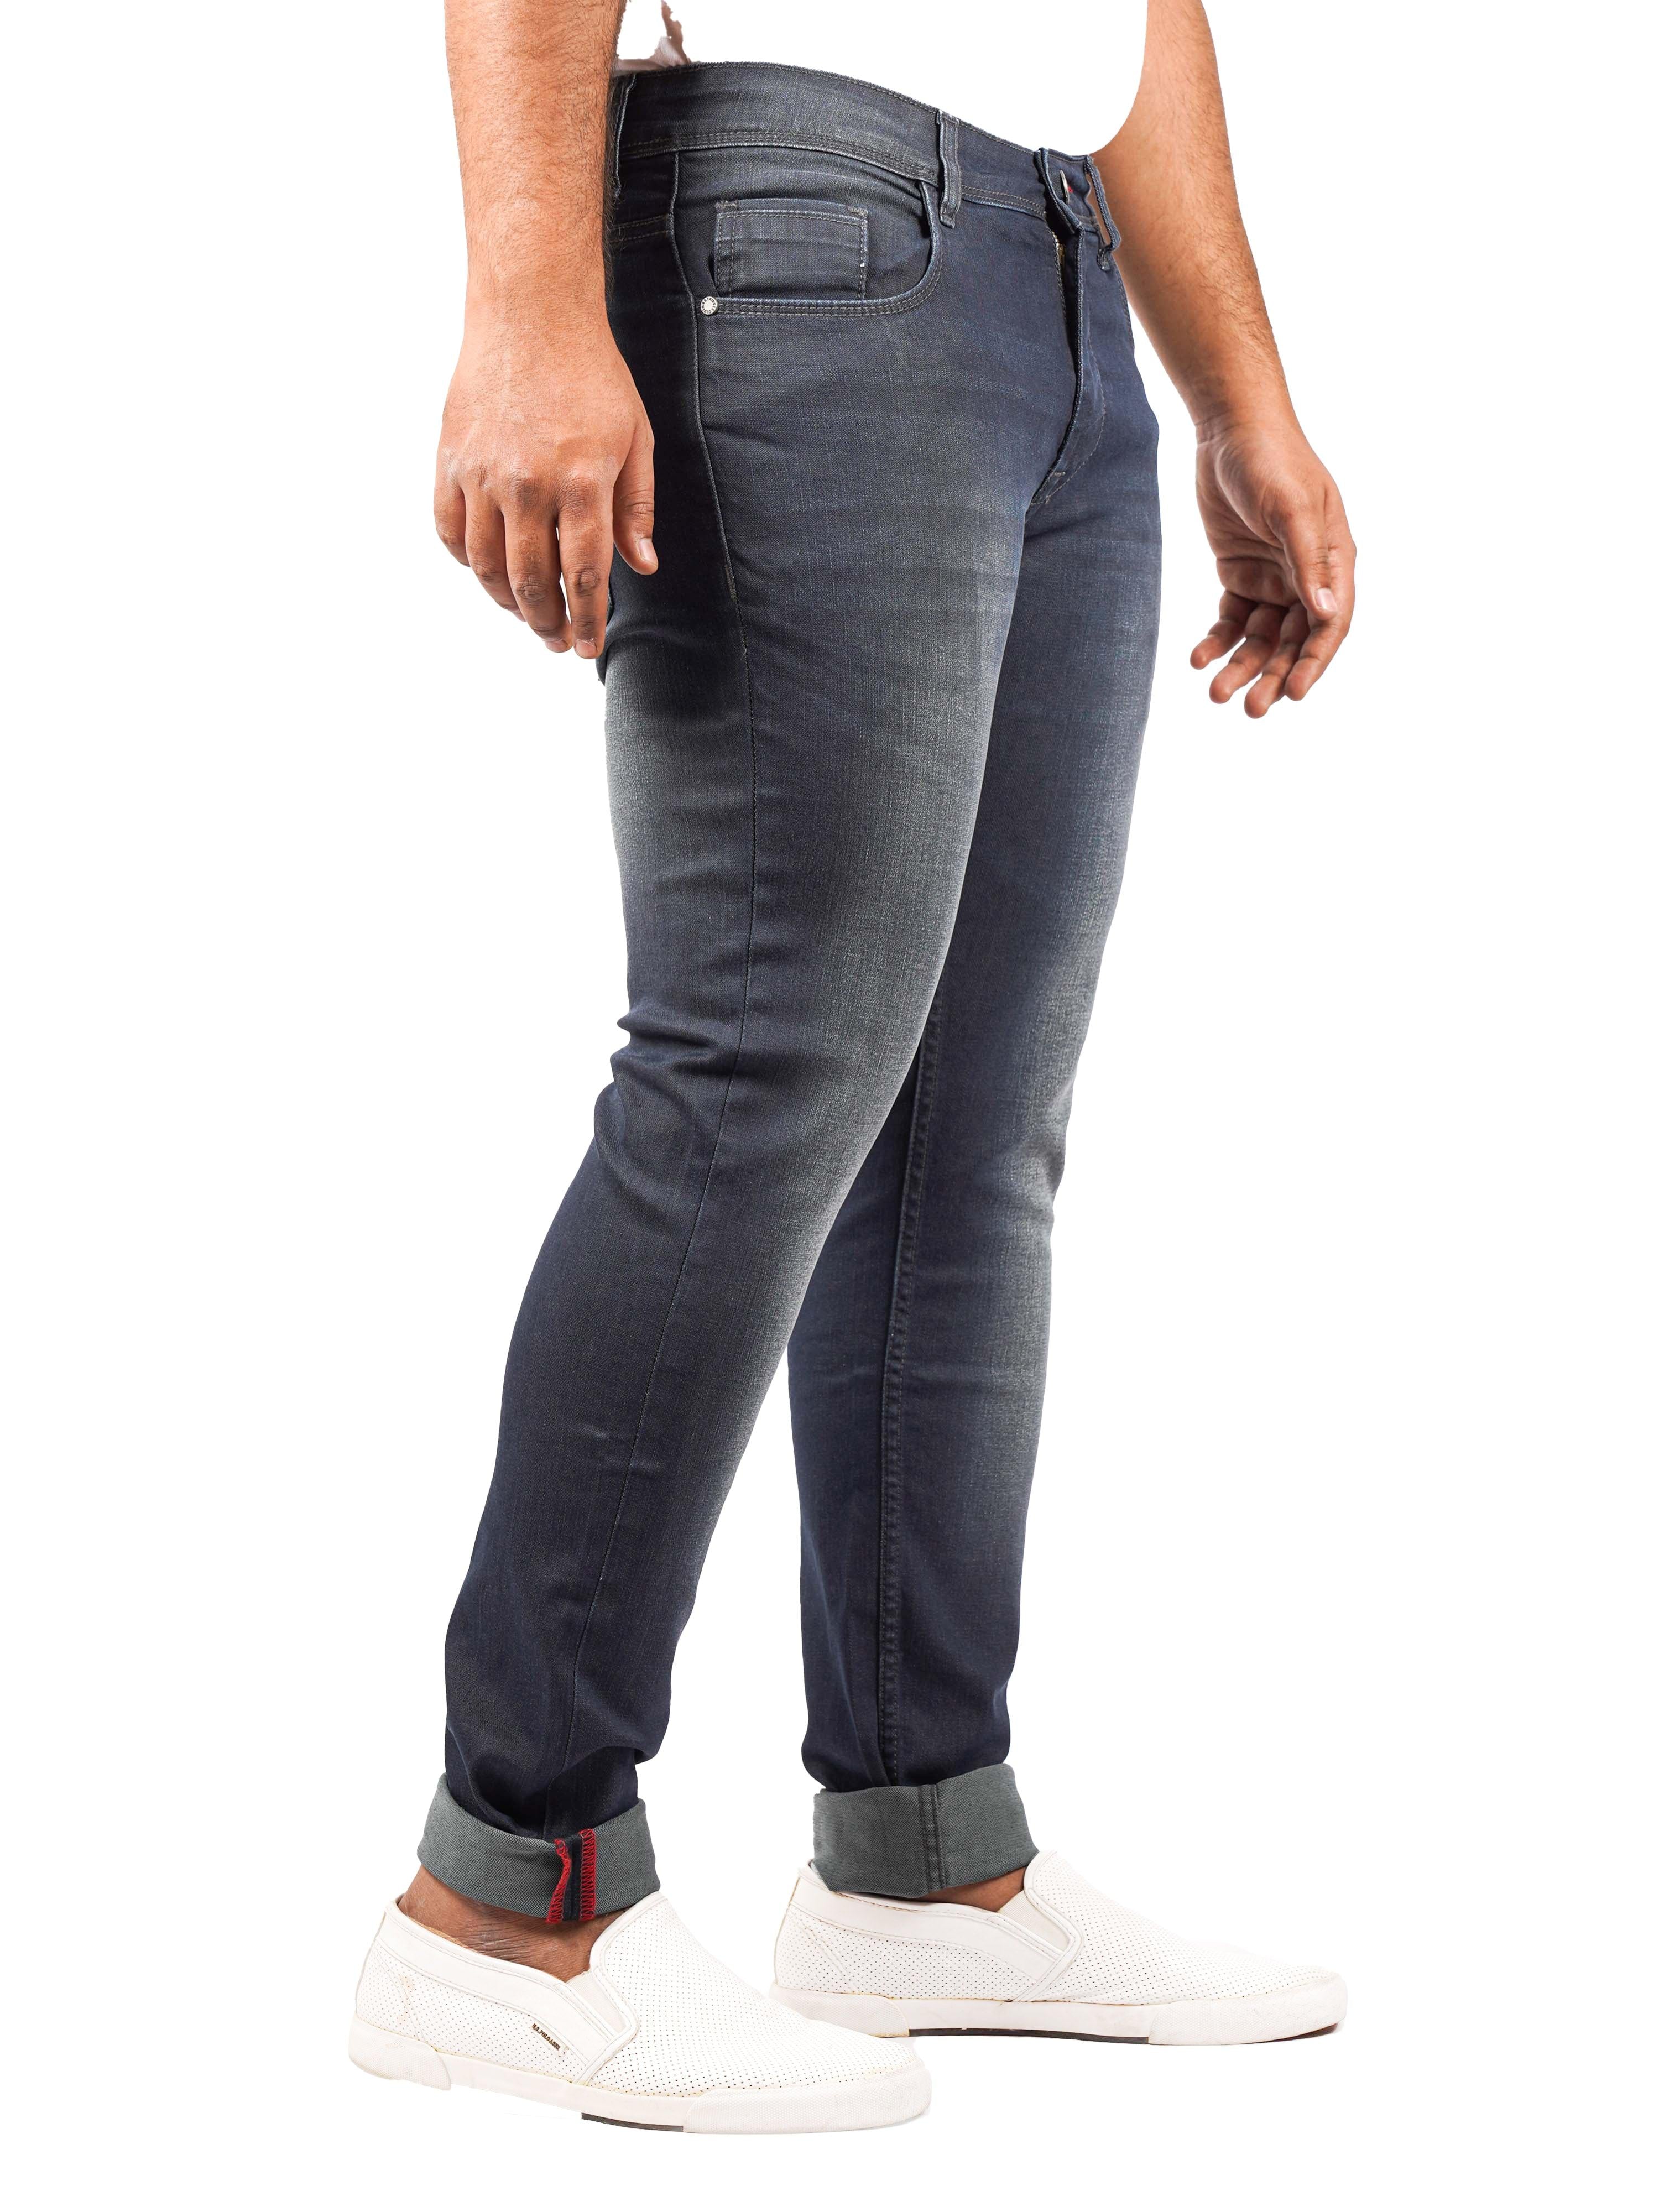 Buy Grey Jeans for Men by URBANO FASHION Online  Ajiocom